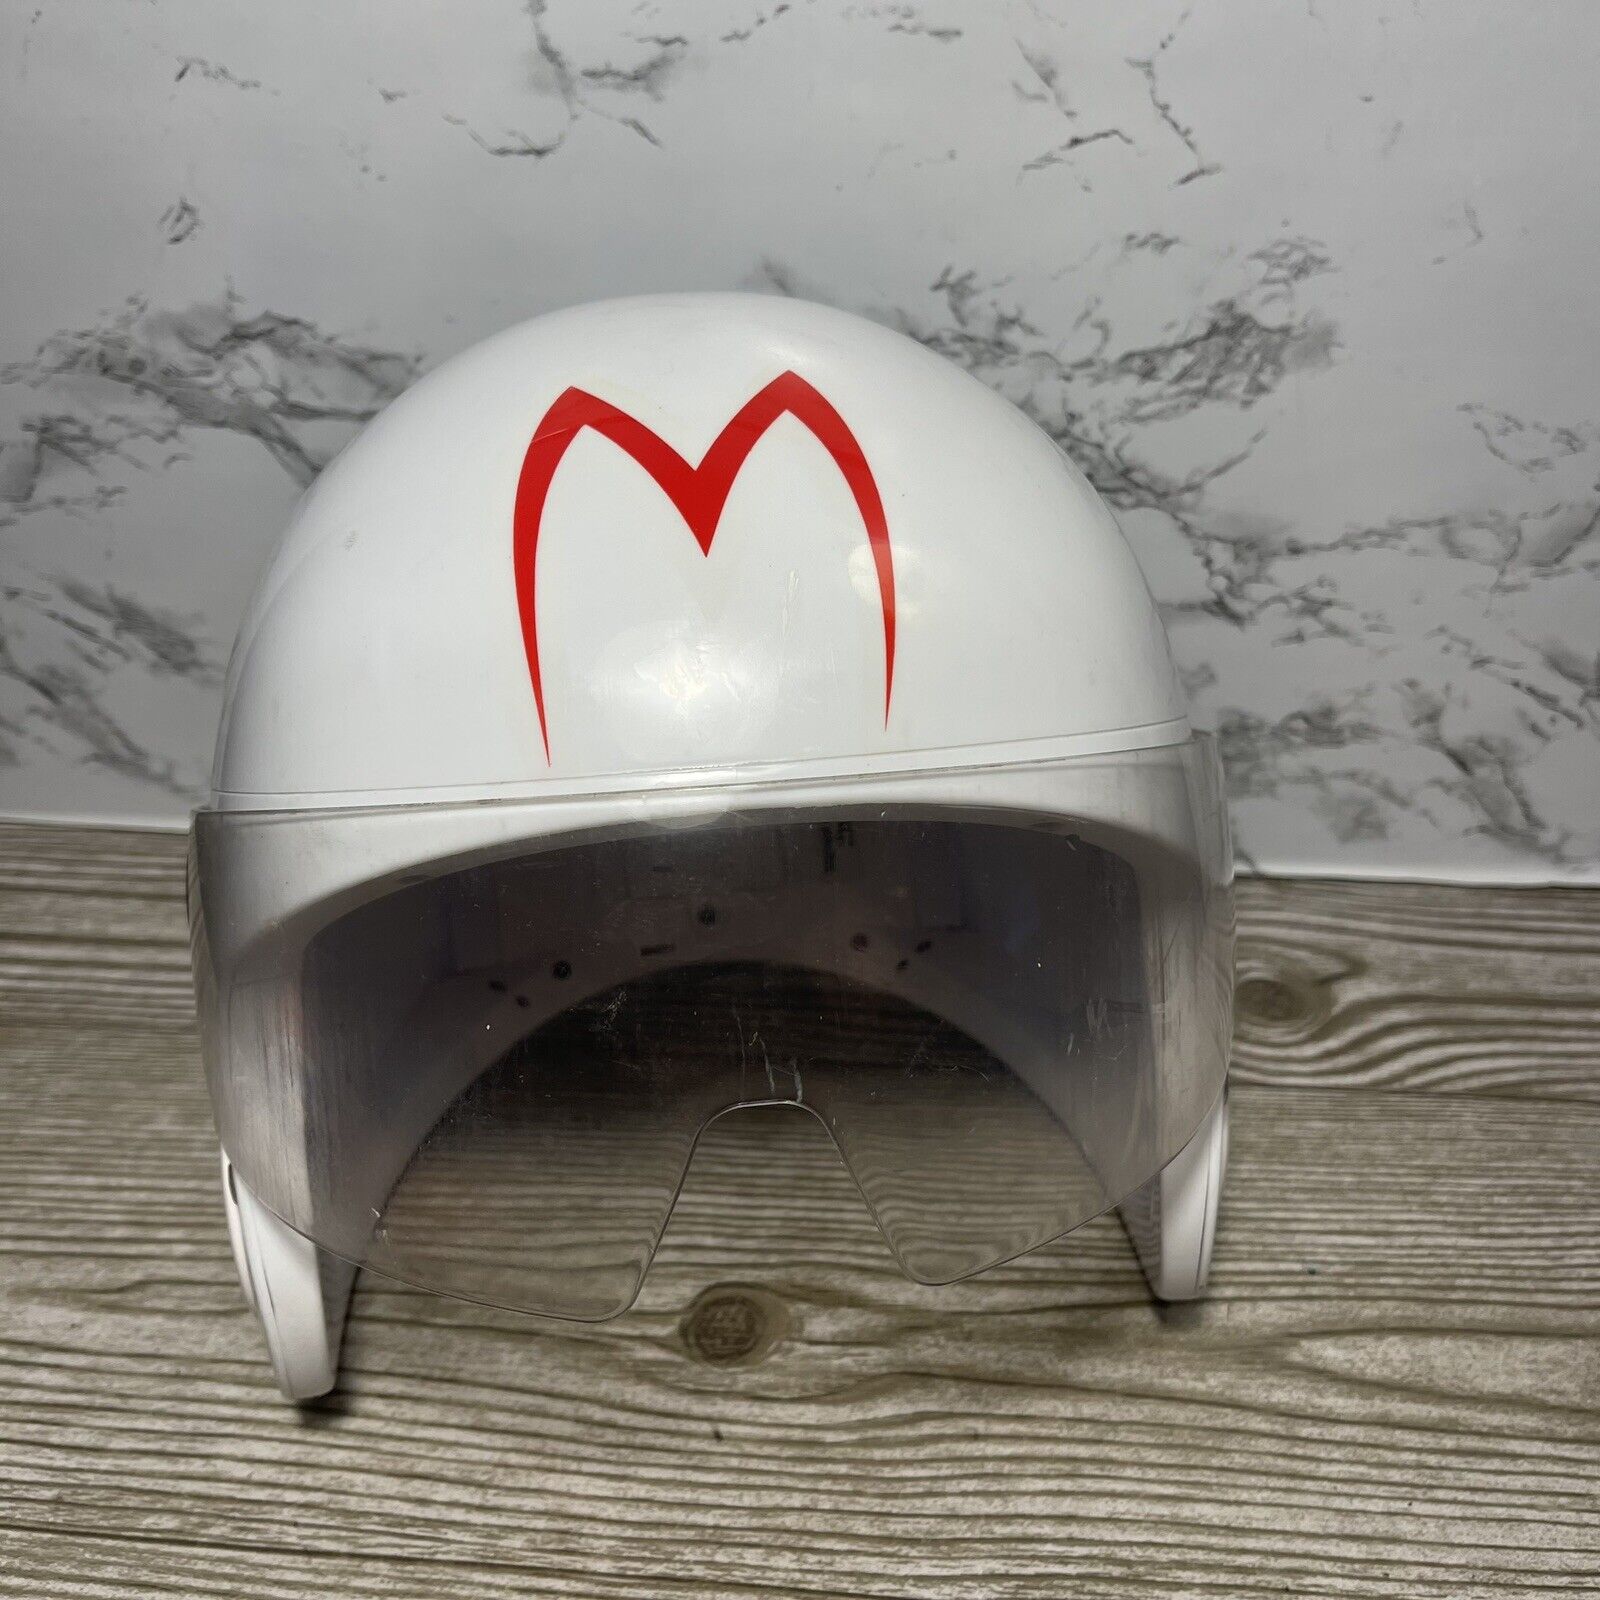 2007 Mattel Speed Racer Movie Mach Helmet - Sounds Does Not Work - Cosplay